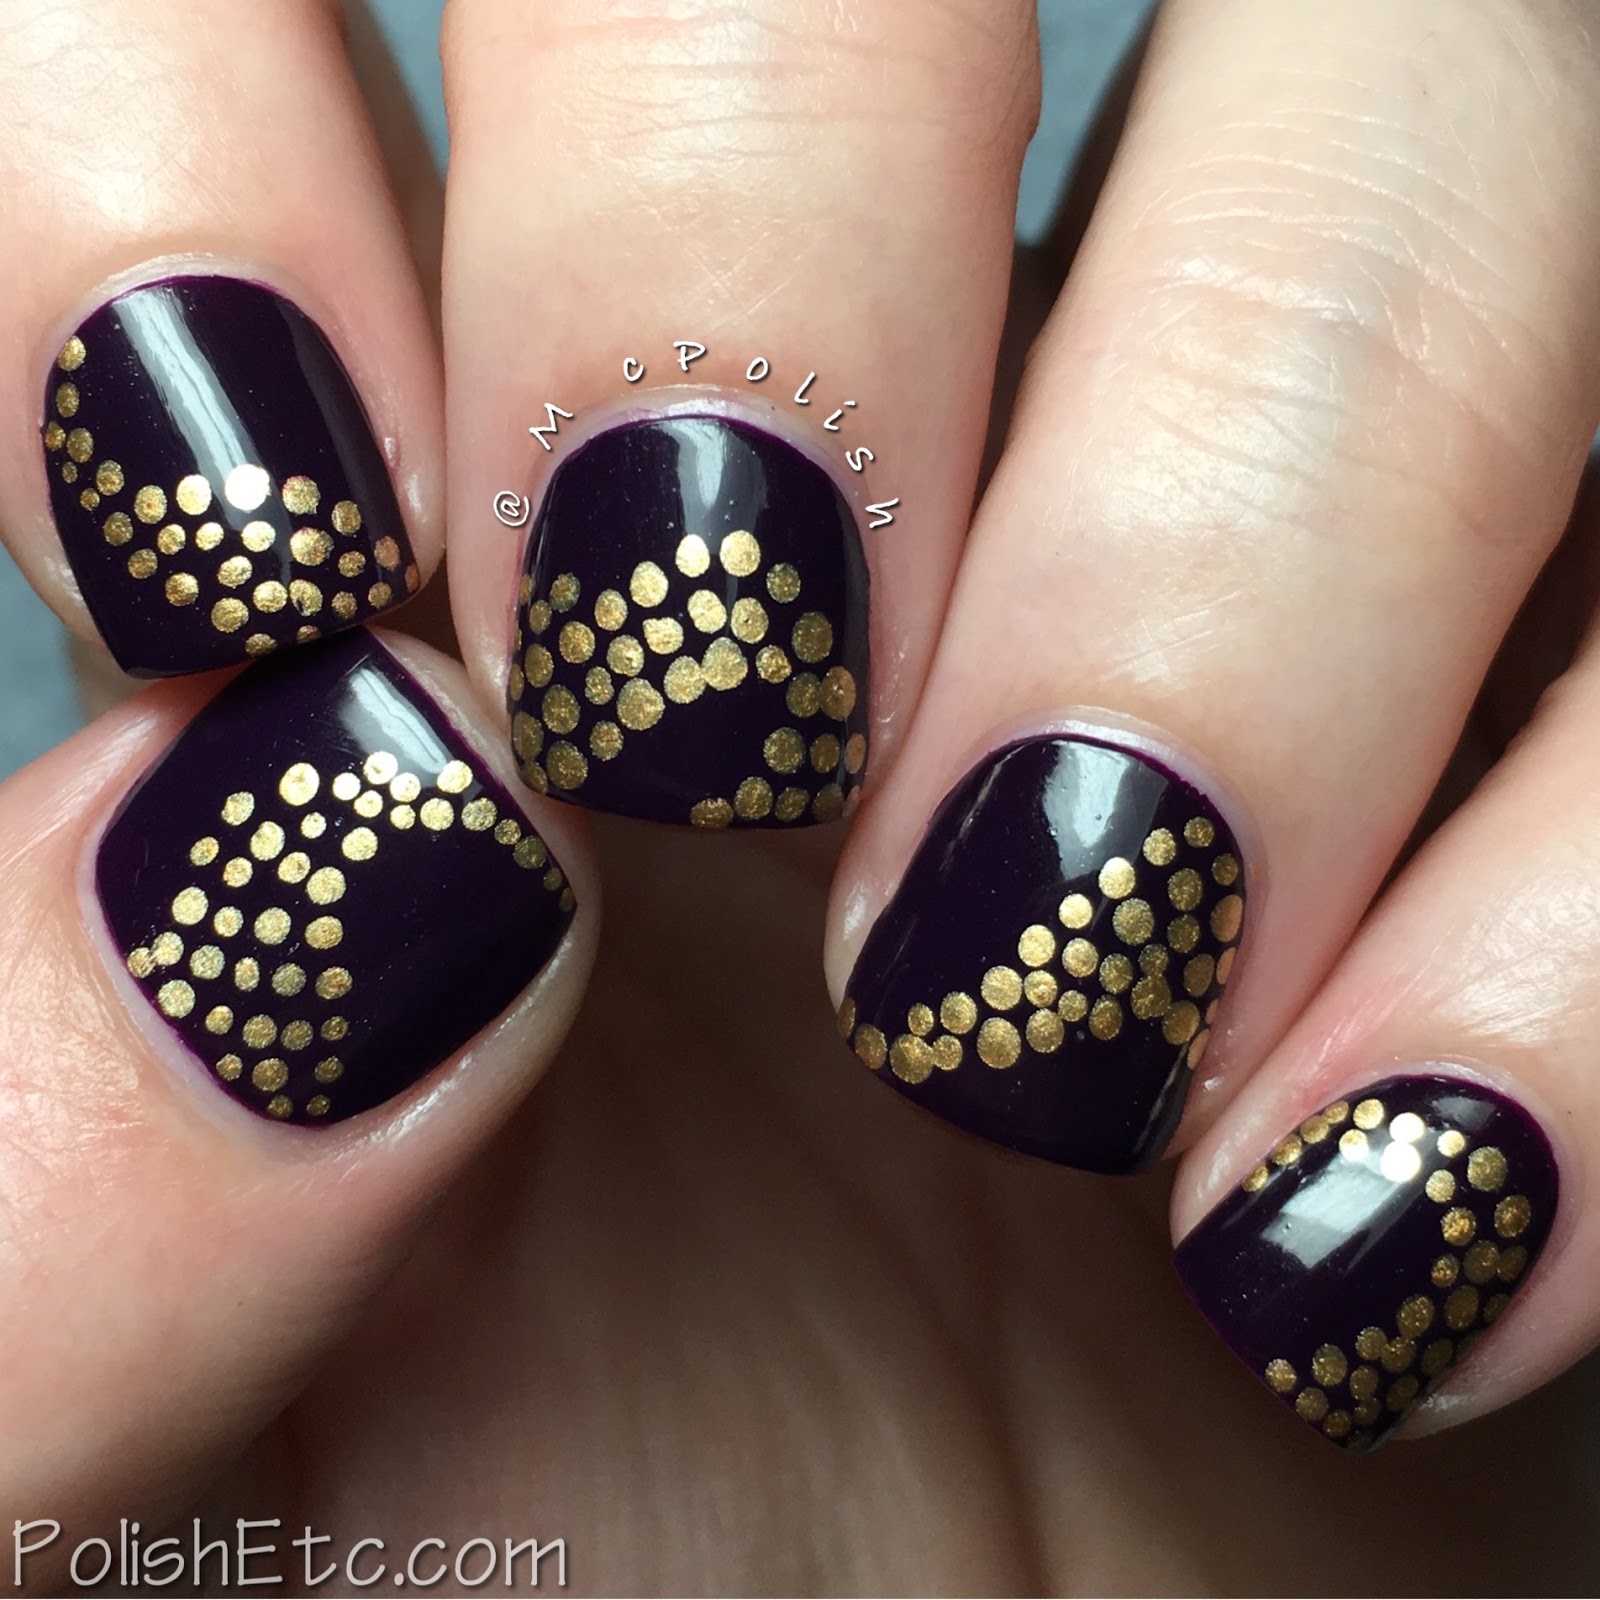 How to Make Polka Dot Nails-Simple Nail Art Design Tutorial | BeautyBigBang